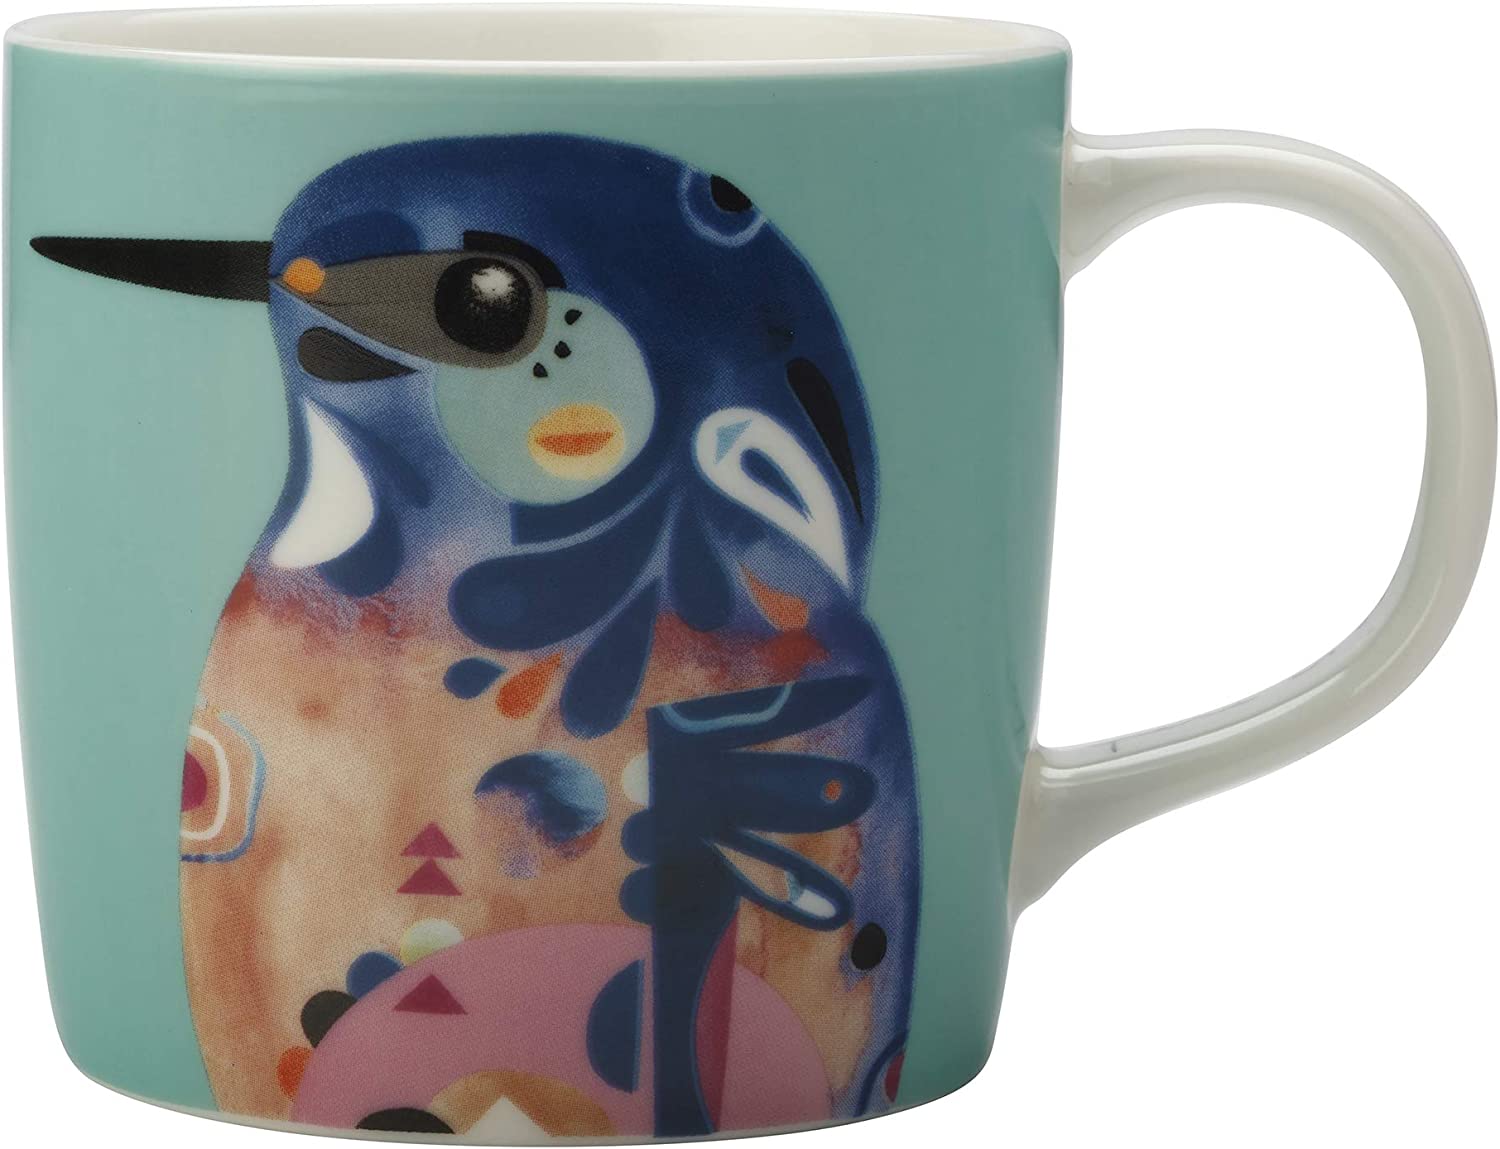 Maxwell & Williams DI0215 Pete Cromer Kingfisher Mug, Porcelain, Multi-Colour, 375 ml, in Gift Box